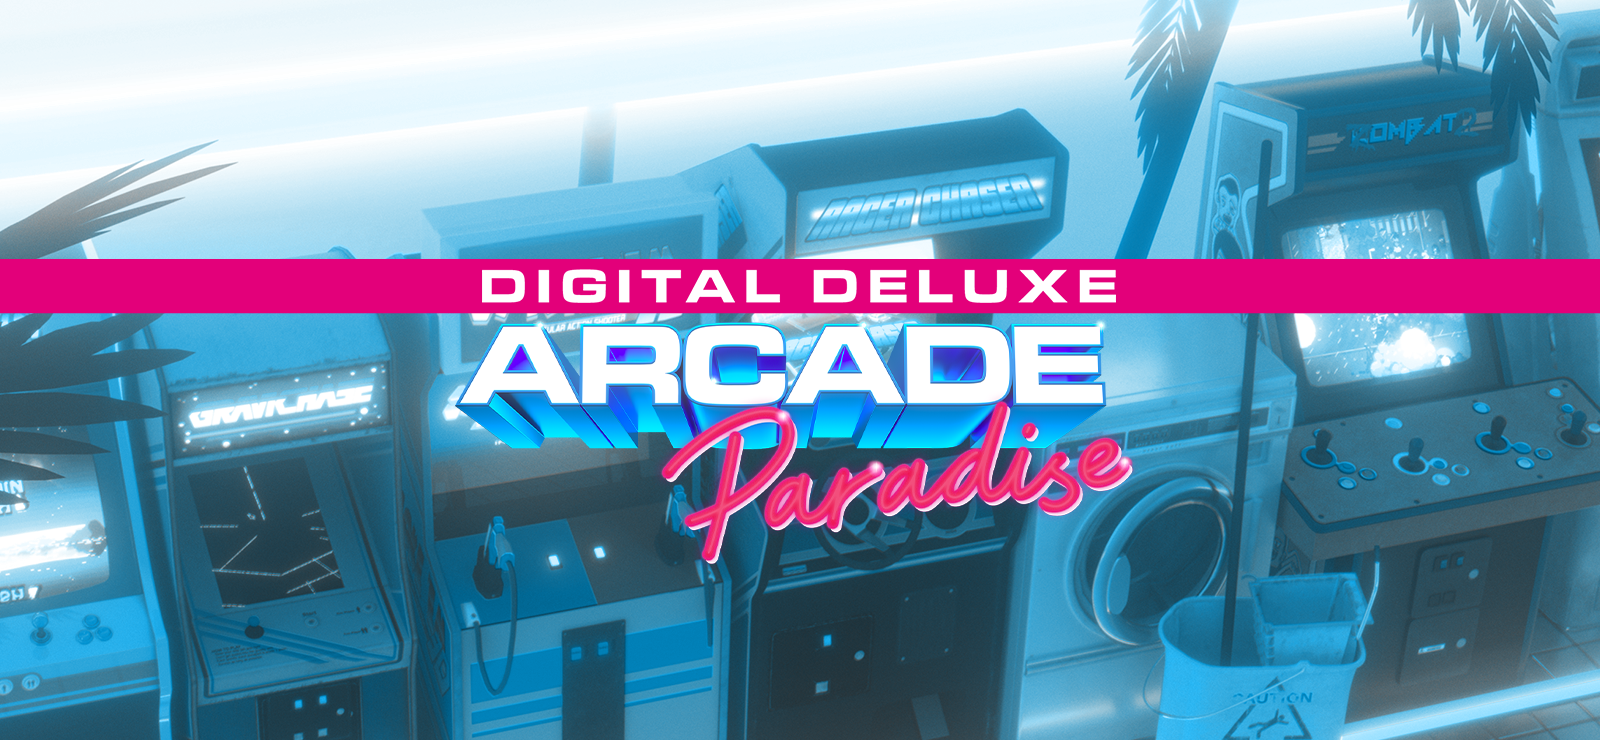 Arcade Paradise Digital Deluxe Edition